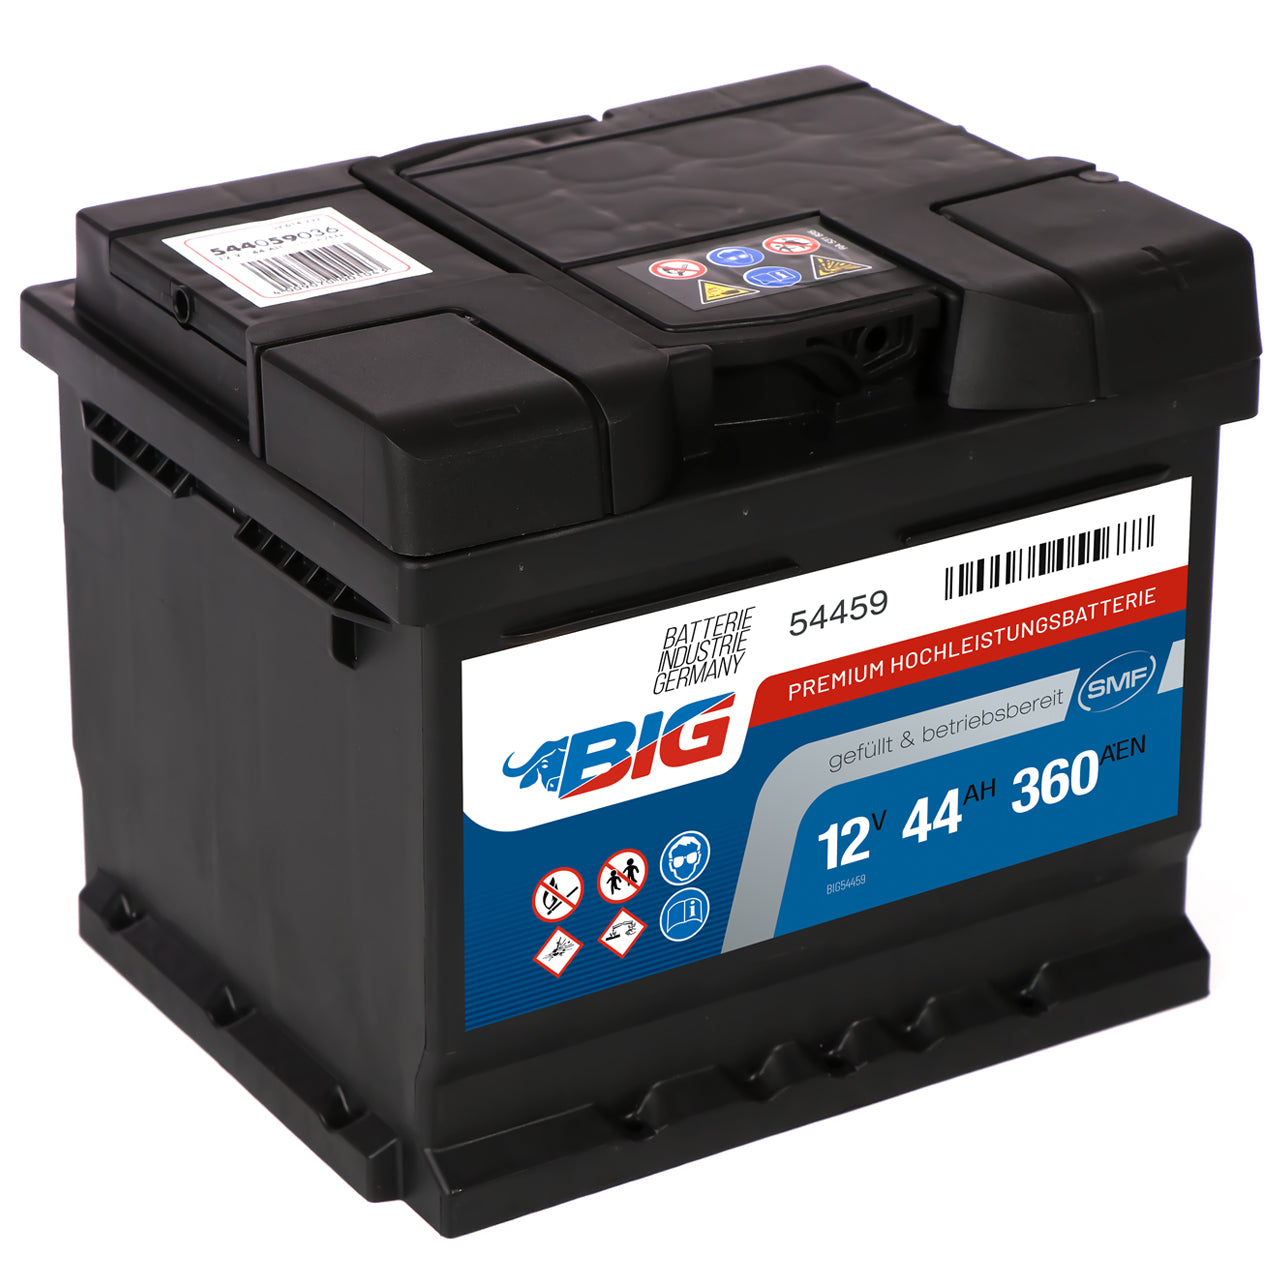 CARIPAR BLUE LINE PKW KFZ Autobatterie Starterbatterie 12V 44Ah 360A/EN B13  